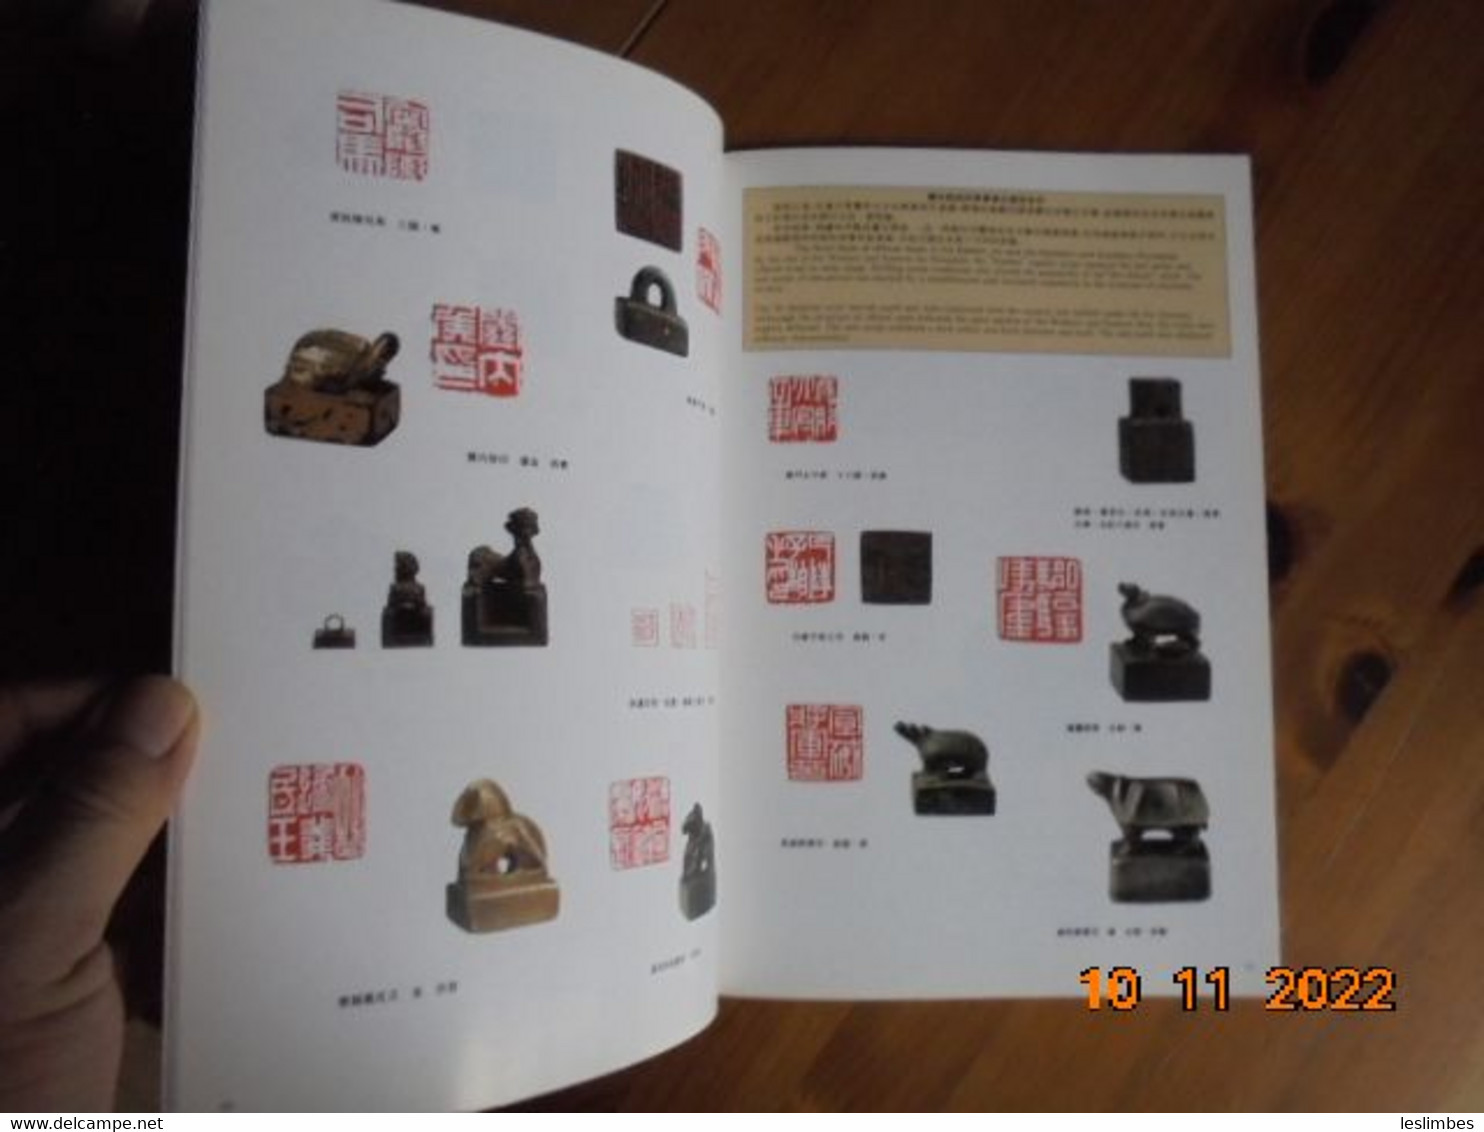 Shanghai Museum Chinese Seal Gallery - Sonstige & Ohne Zuordnung